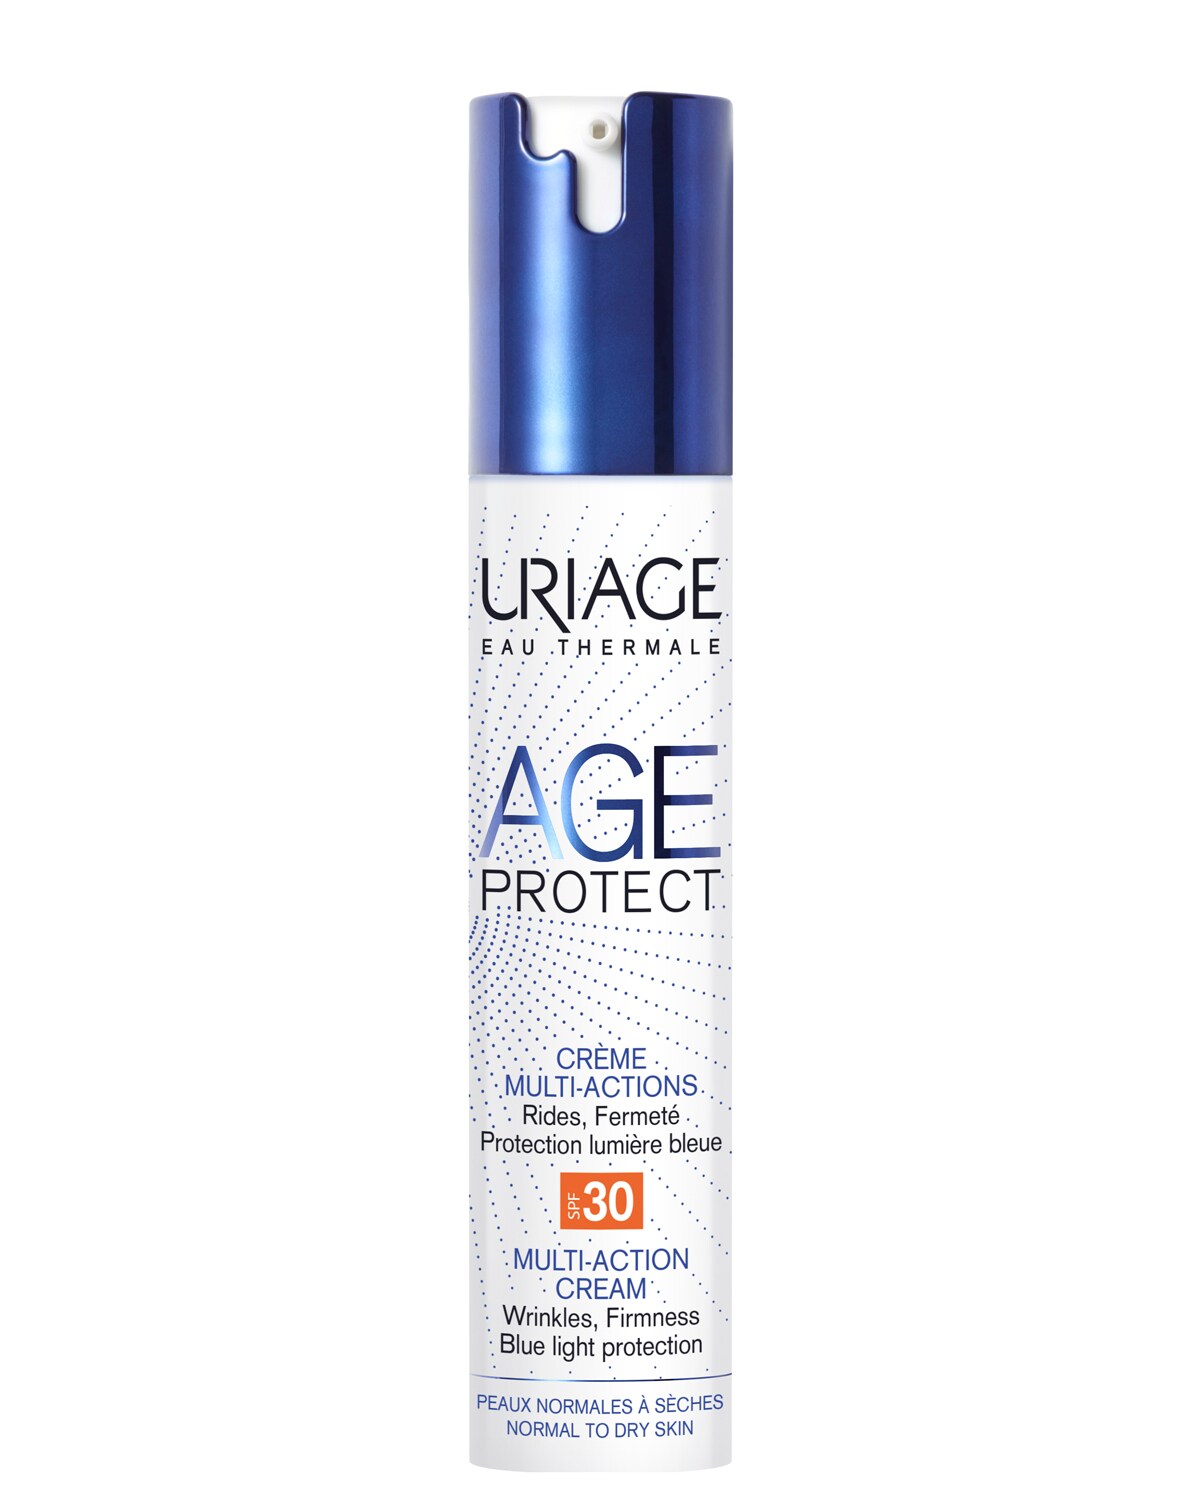 Age Protect Crema multi-acción SPF30 para pieles normales a secas de Uriage